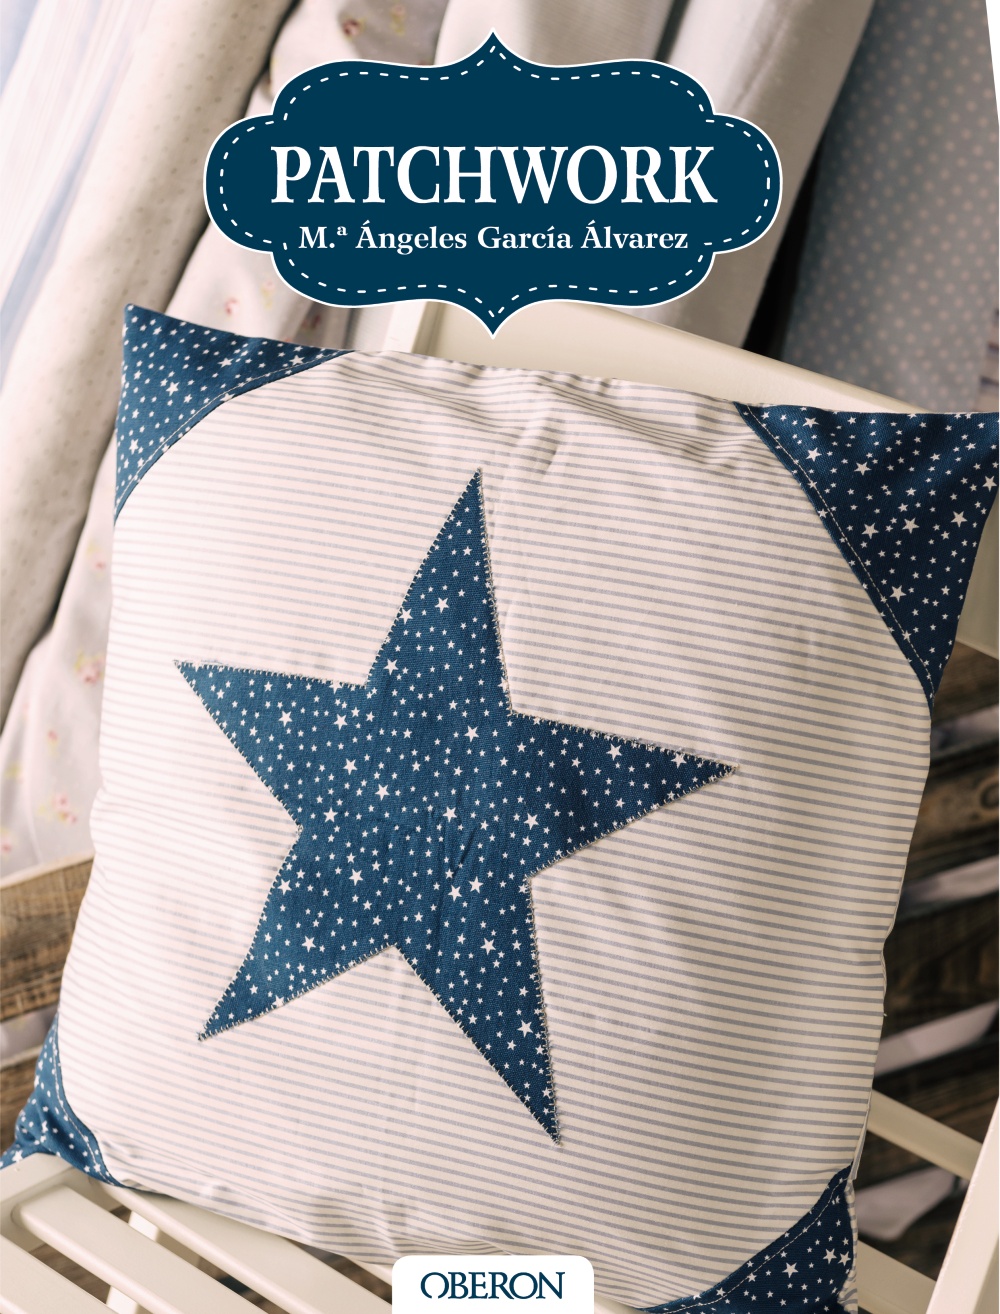 patchwork-978-84-415-3833-7.jpg